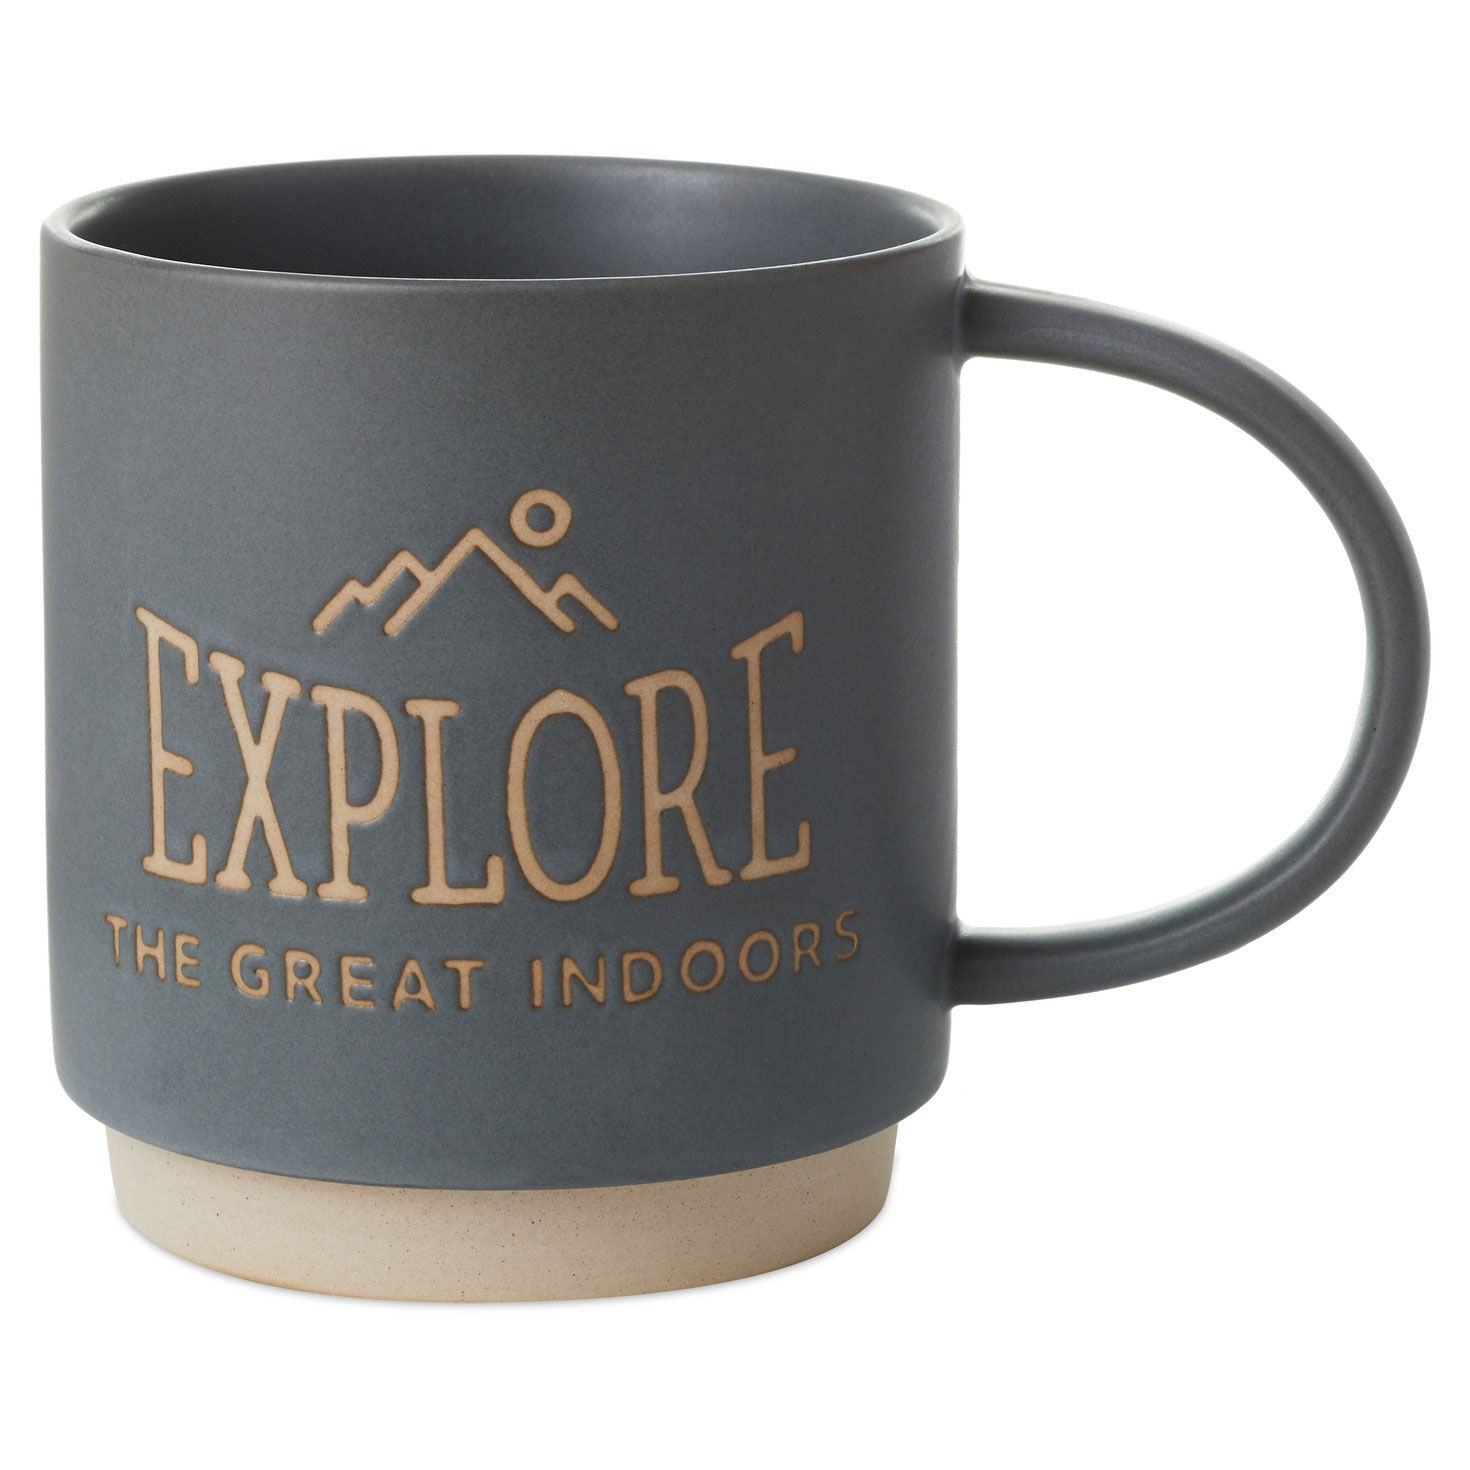 Explore Indoors Funny Mug, 16 oz. for only USD 16.99 | Hallmark